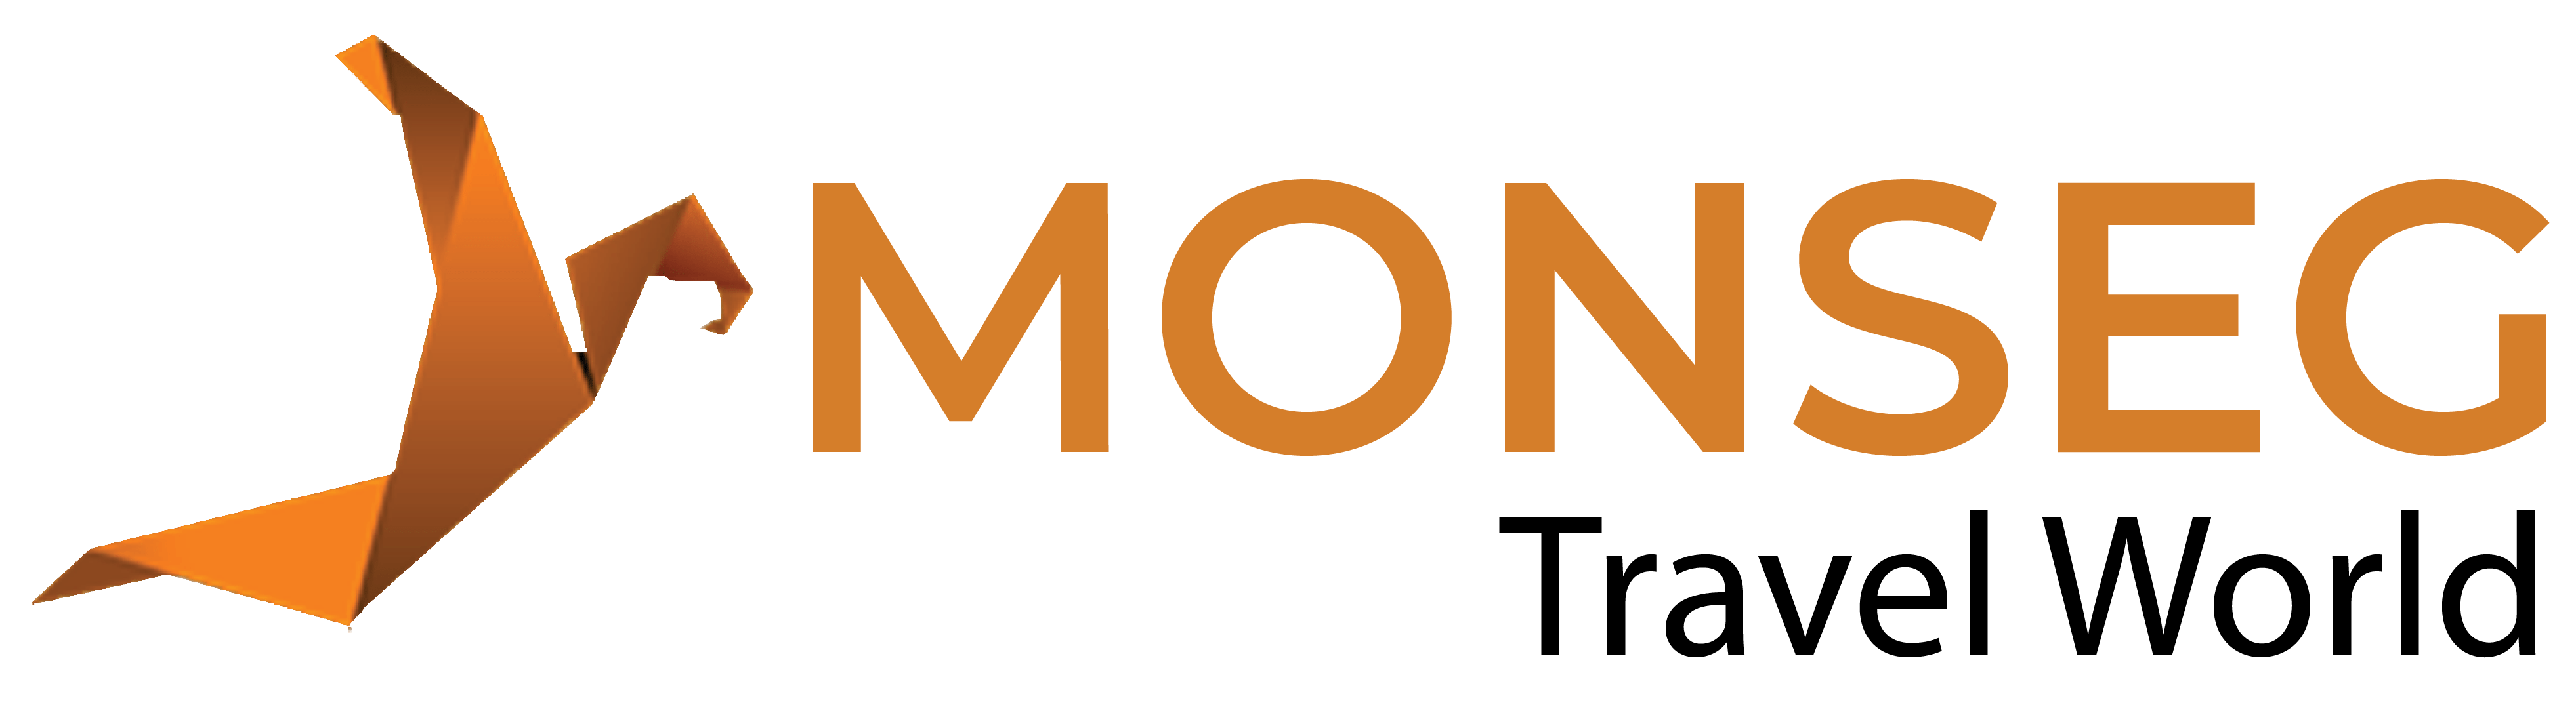 Monseg Travels World